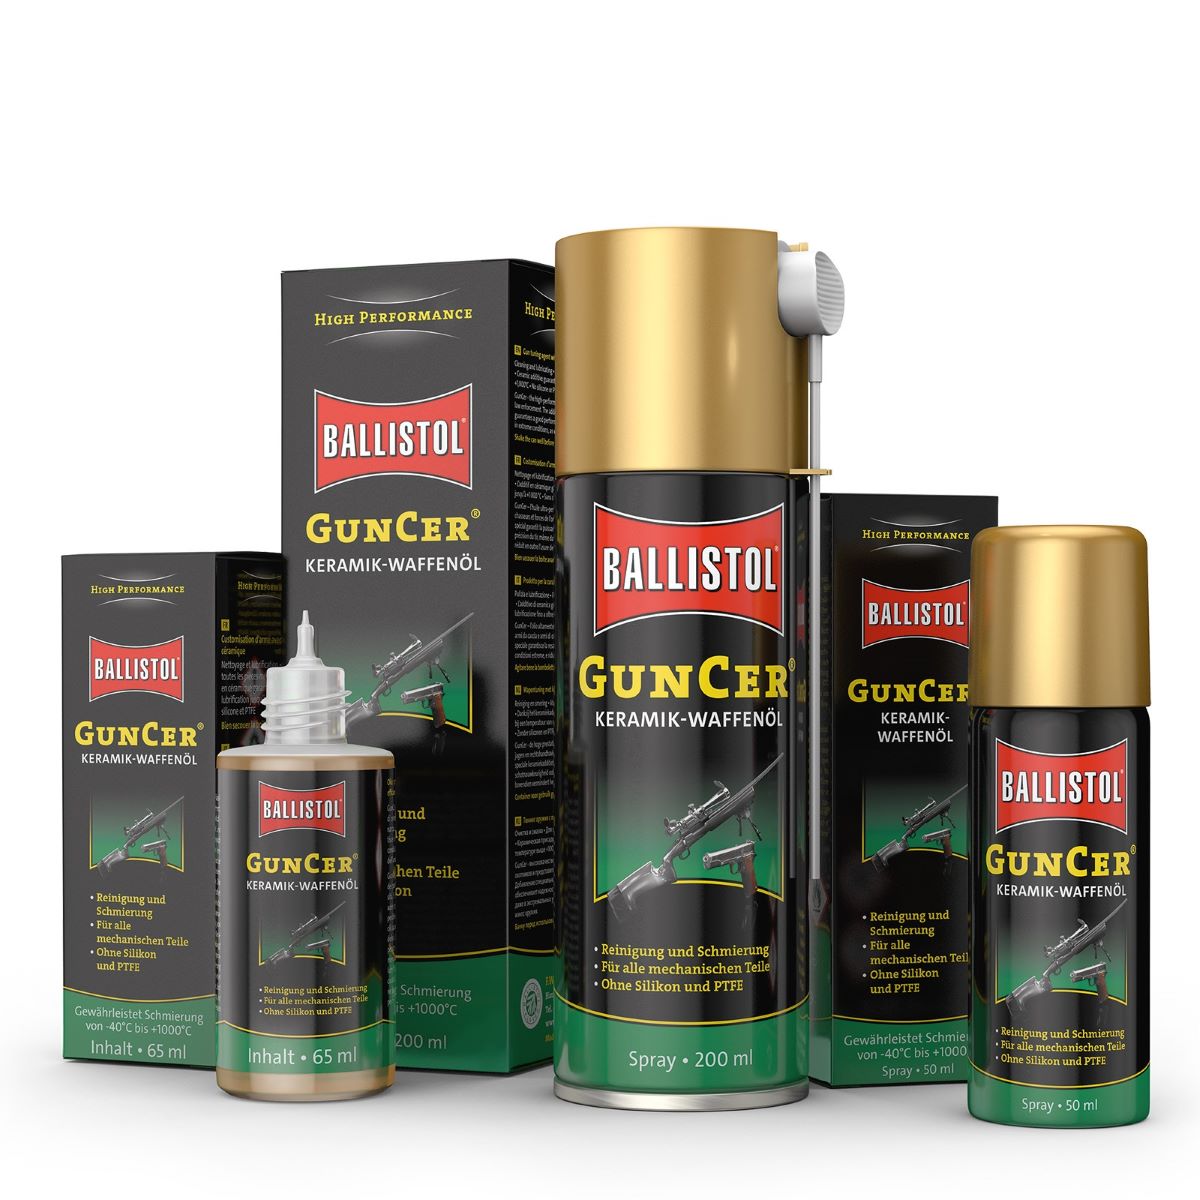 Ballistol Guncer Keramik-Waffenöl Spray 200 ml